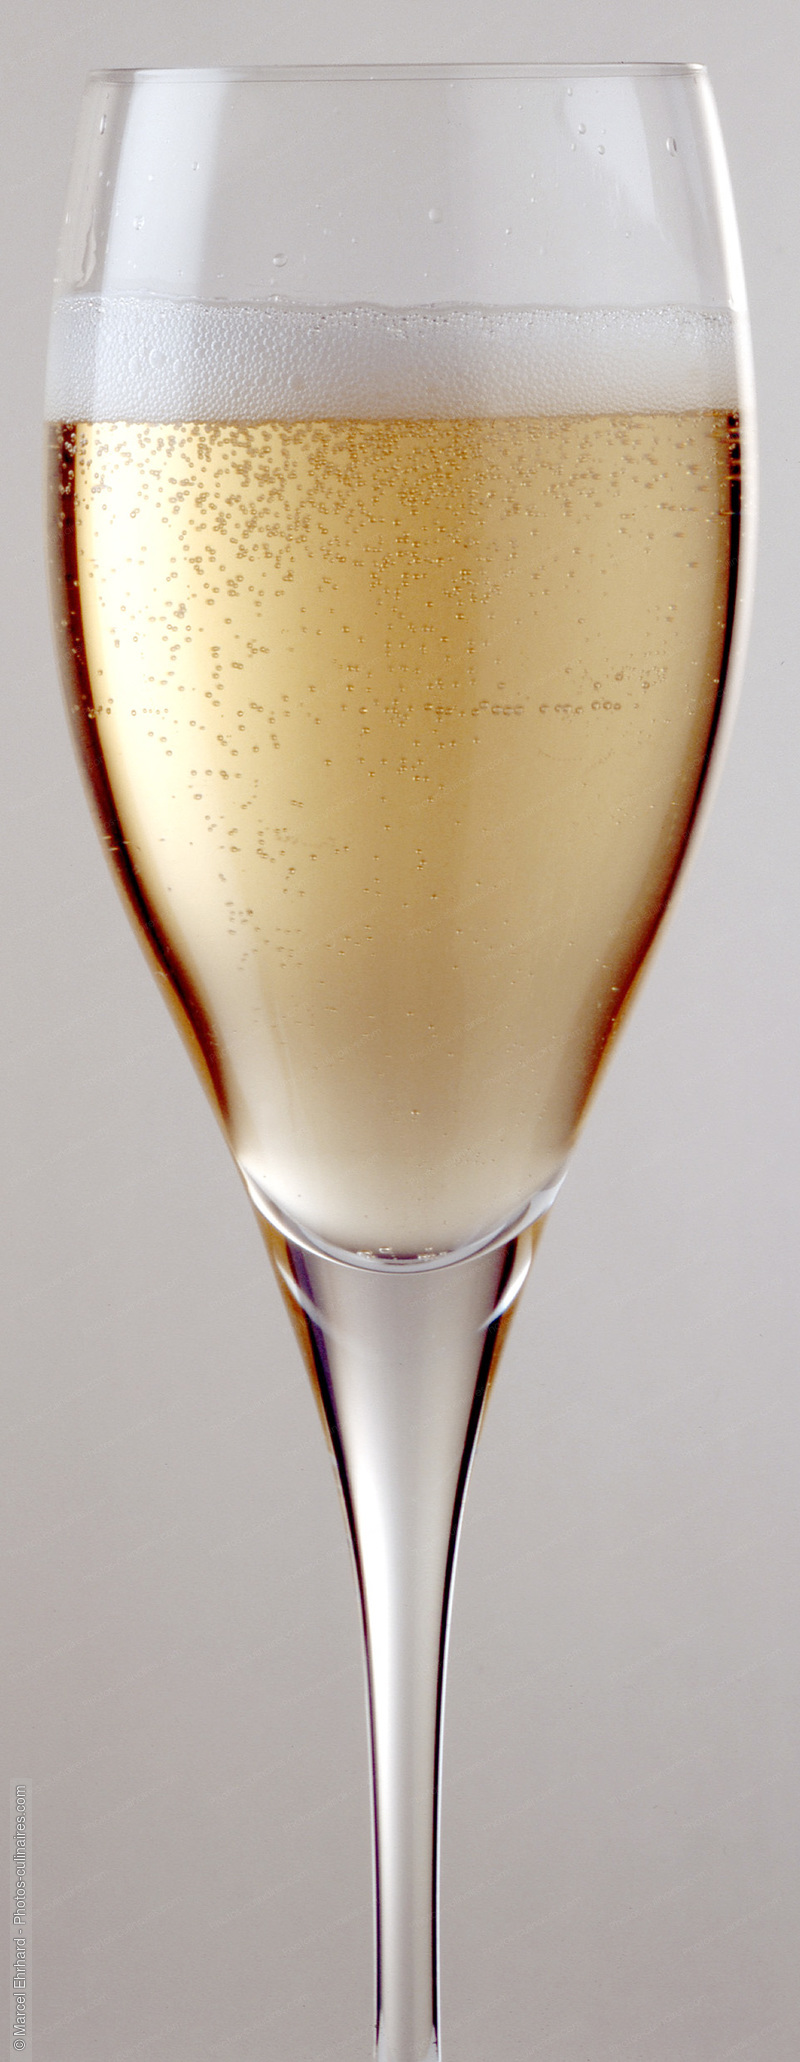 Flûte de champagne - photo référence BO35.jpg